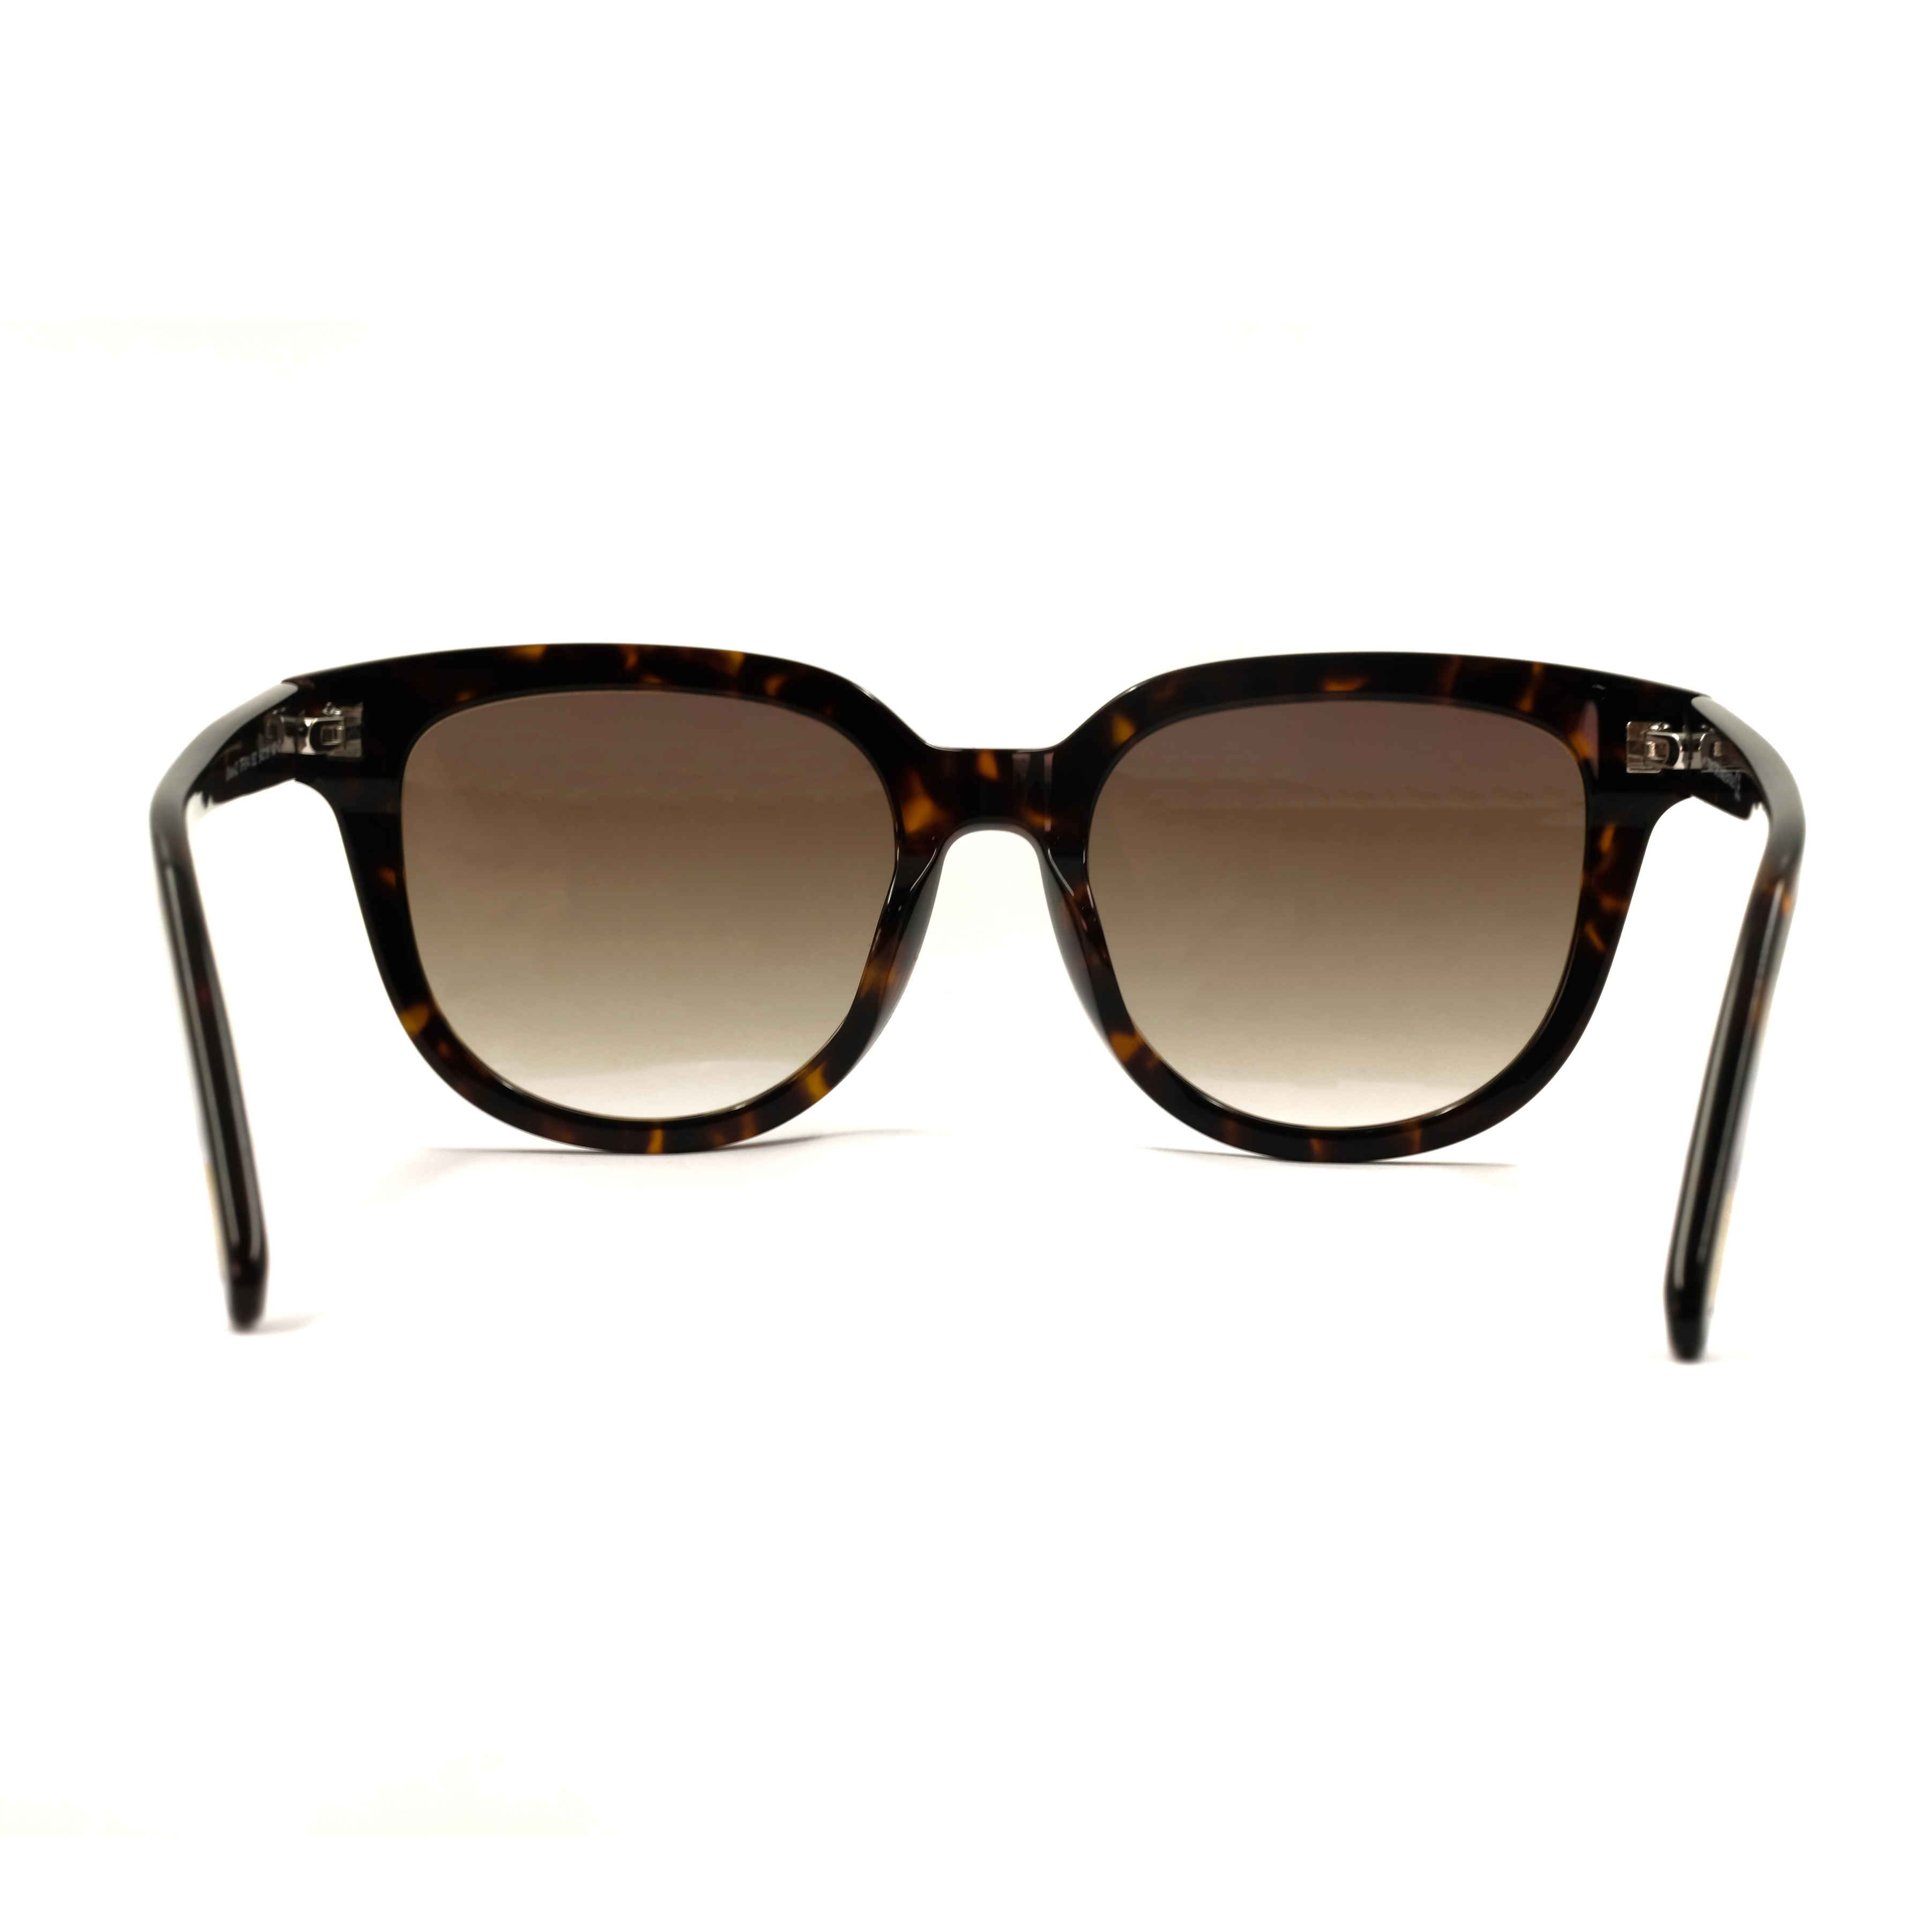 Classical Sunglasses Manufacturer Gradient Brown Polarized Lenses Demi Tortoise Acetate Frames